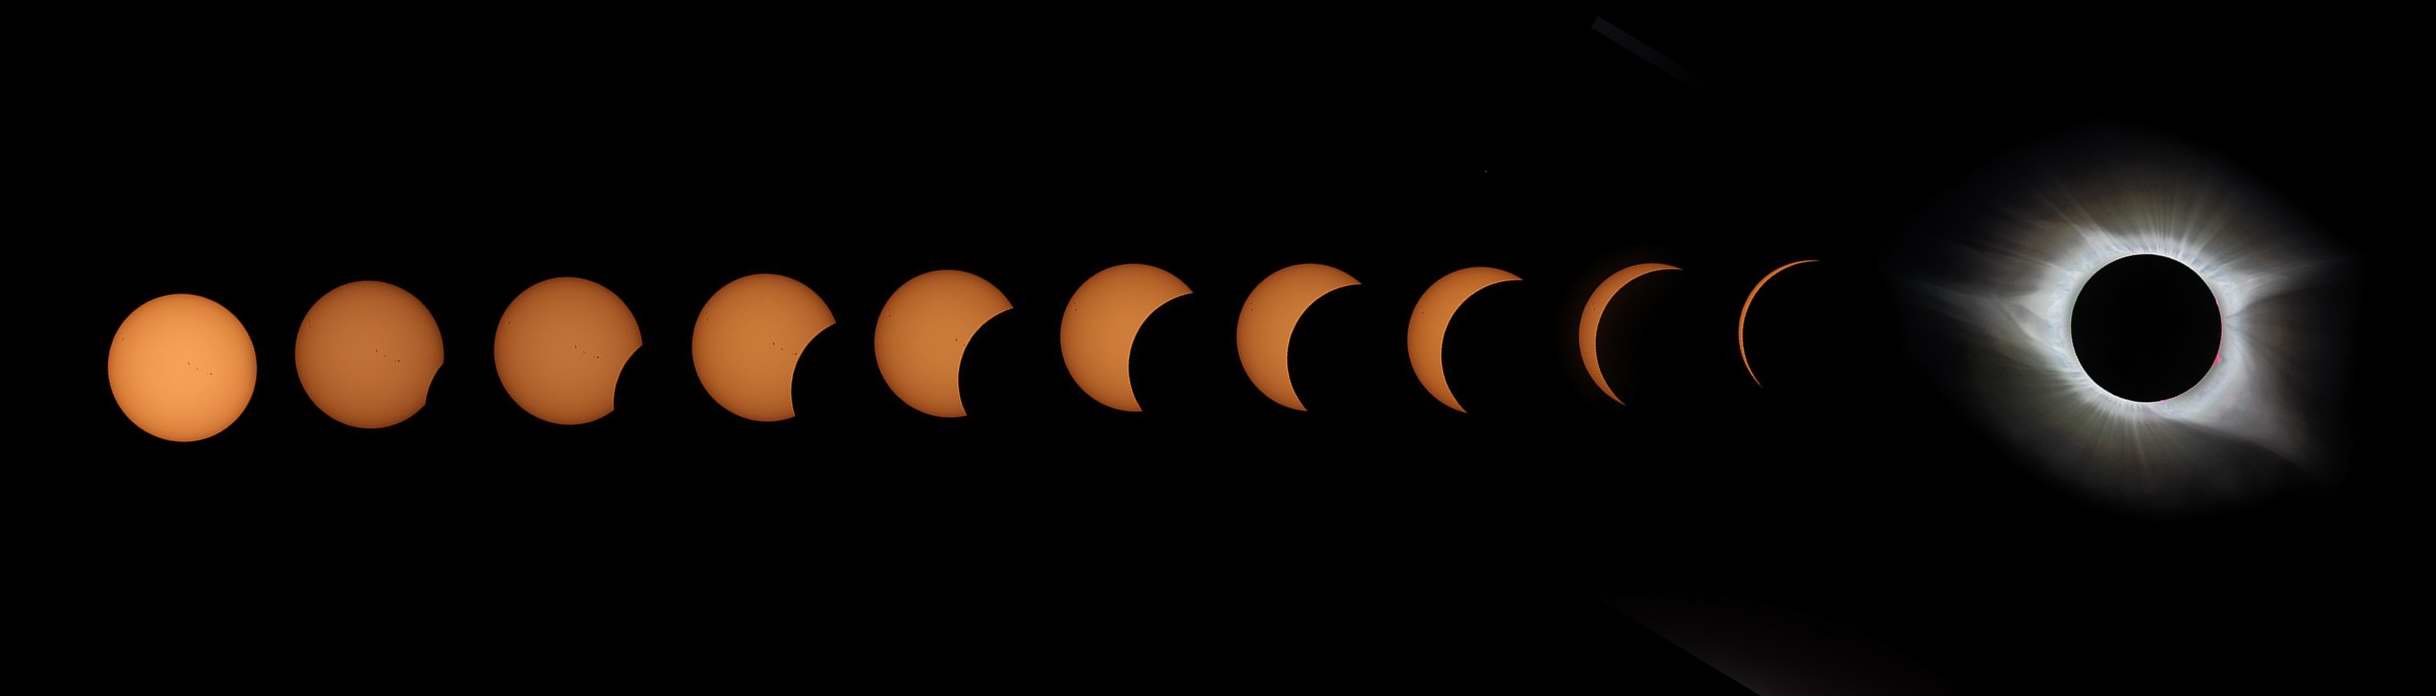 2017 Total Solar Eclipse Collage by Paul Borchardt - MAS image